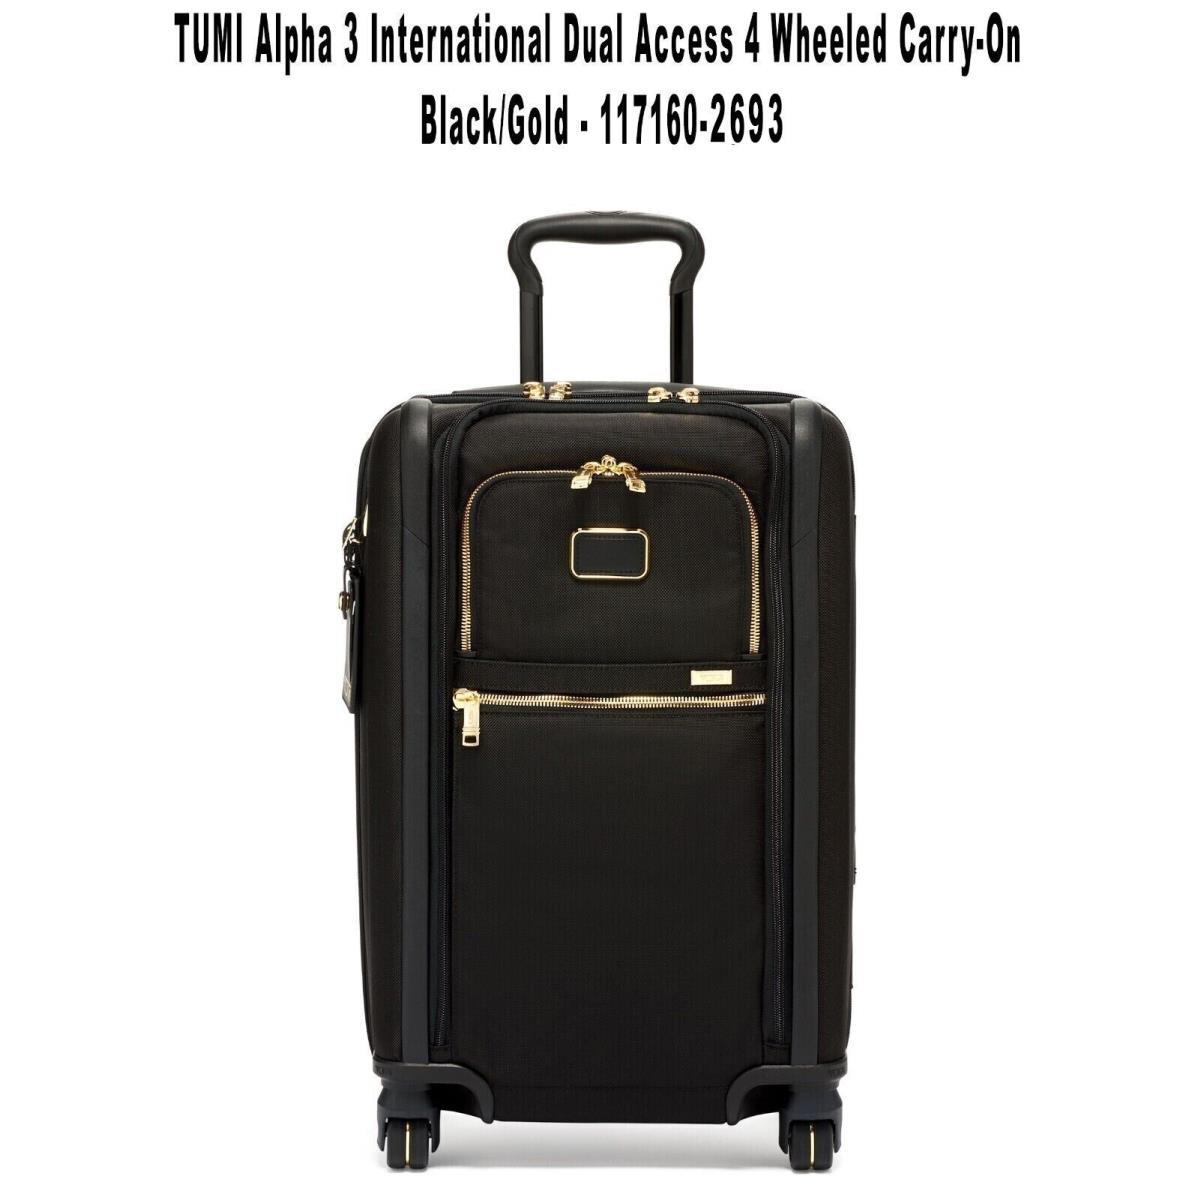 Tumi Alpha 3 International Dual Access 4 Whl Carry-on - Black/gold - 117160-2693